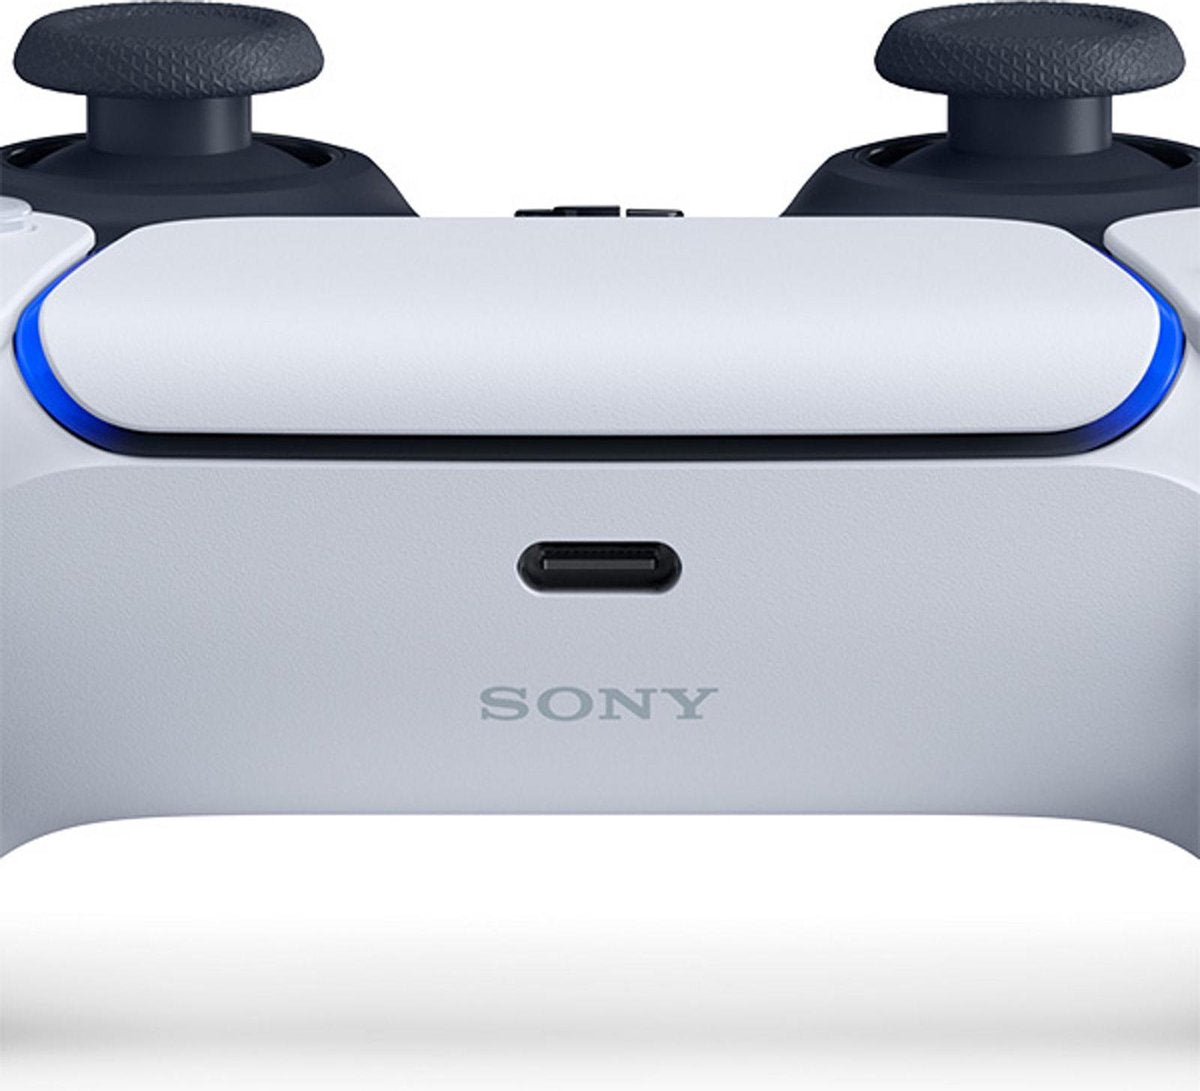 Sony PlayStation DualSense draadloze controller - PS5